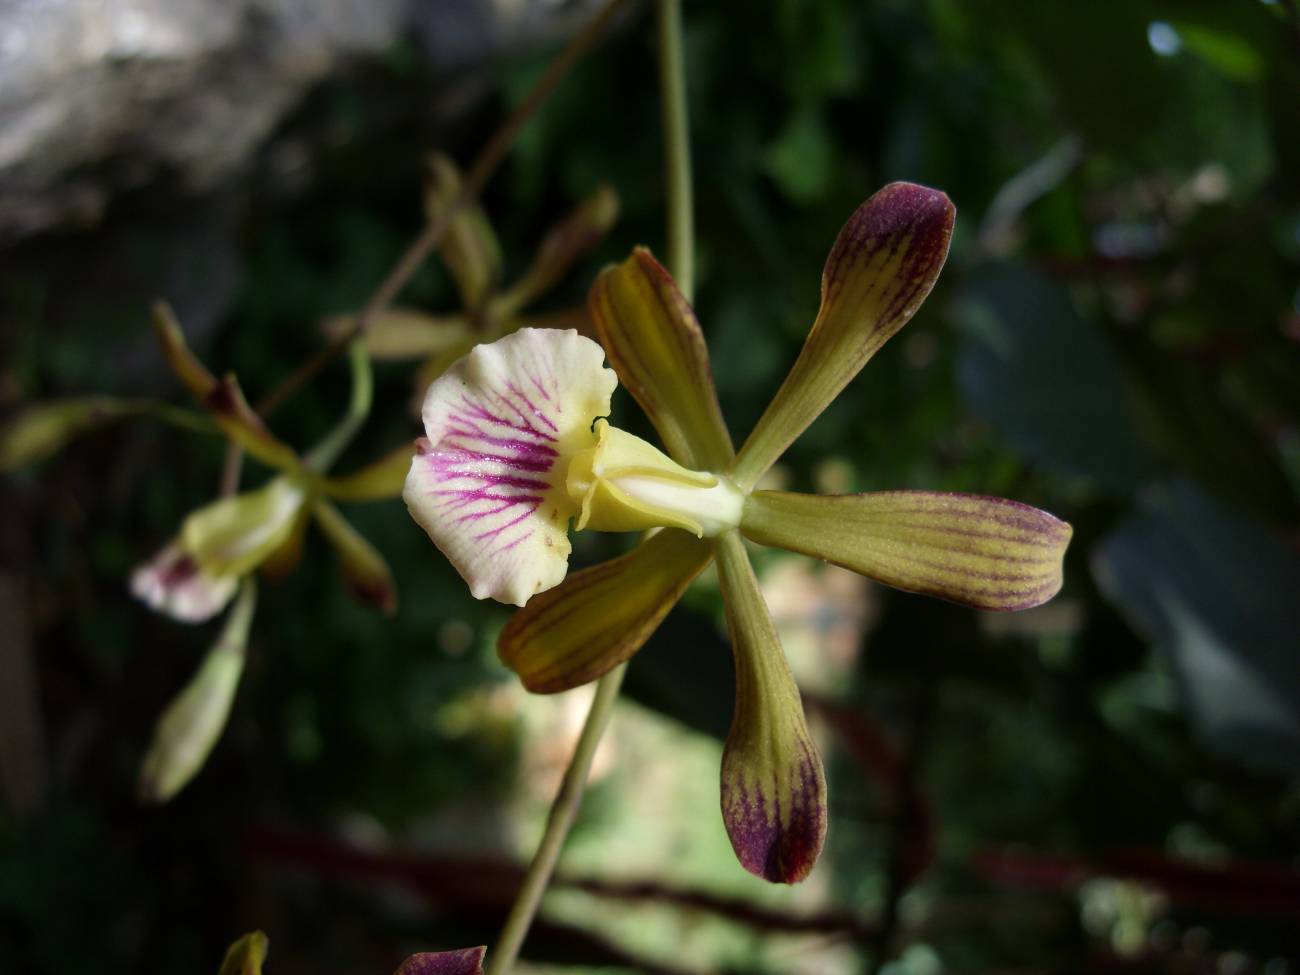 Orchidee der bedrohten Gattung Encyclia (Symbolbild) | Bildquelle: https://www.agenciasinc.es/Noticias/Encuentran-dos-nuevas-especies-de-orquideas-en-Cuba © Angel Vale | Bilder sind in der Regel urheberrechtlich geschützt